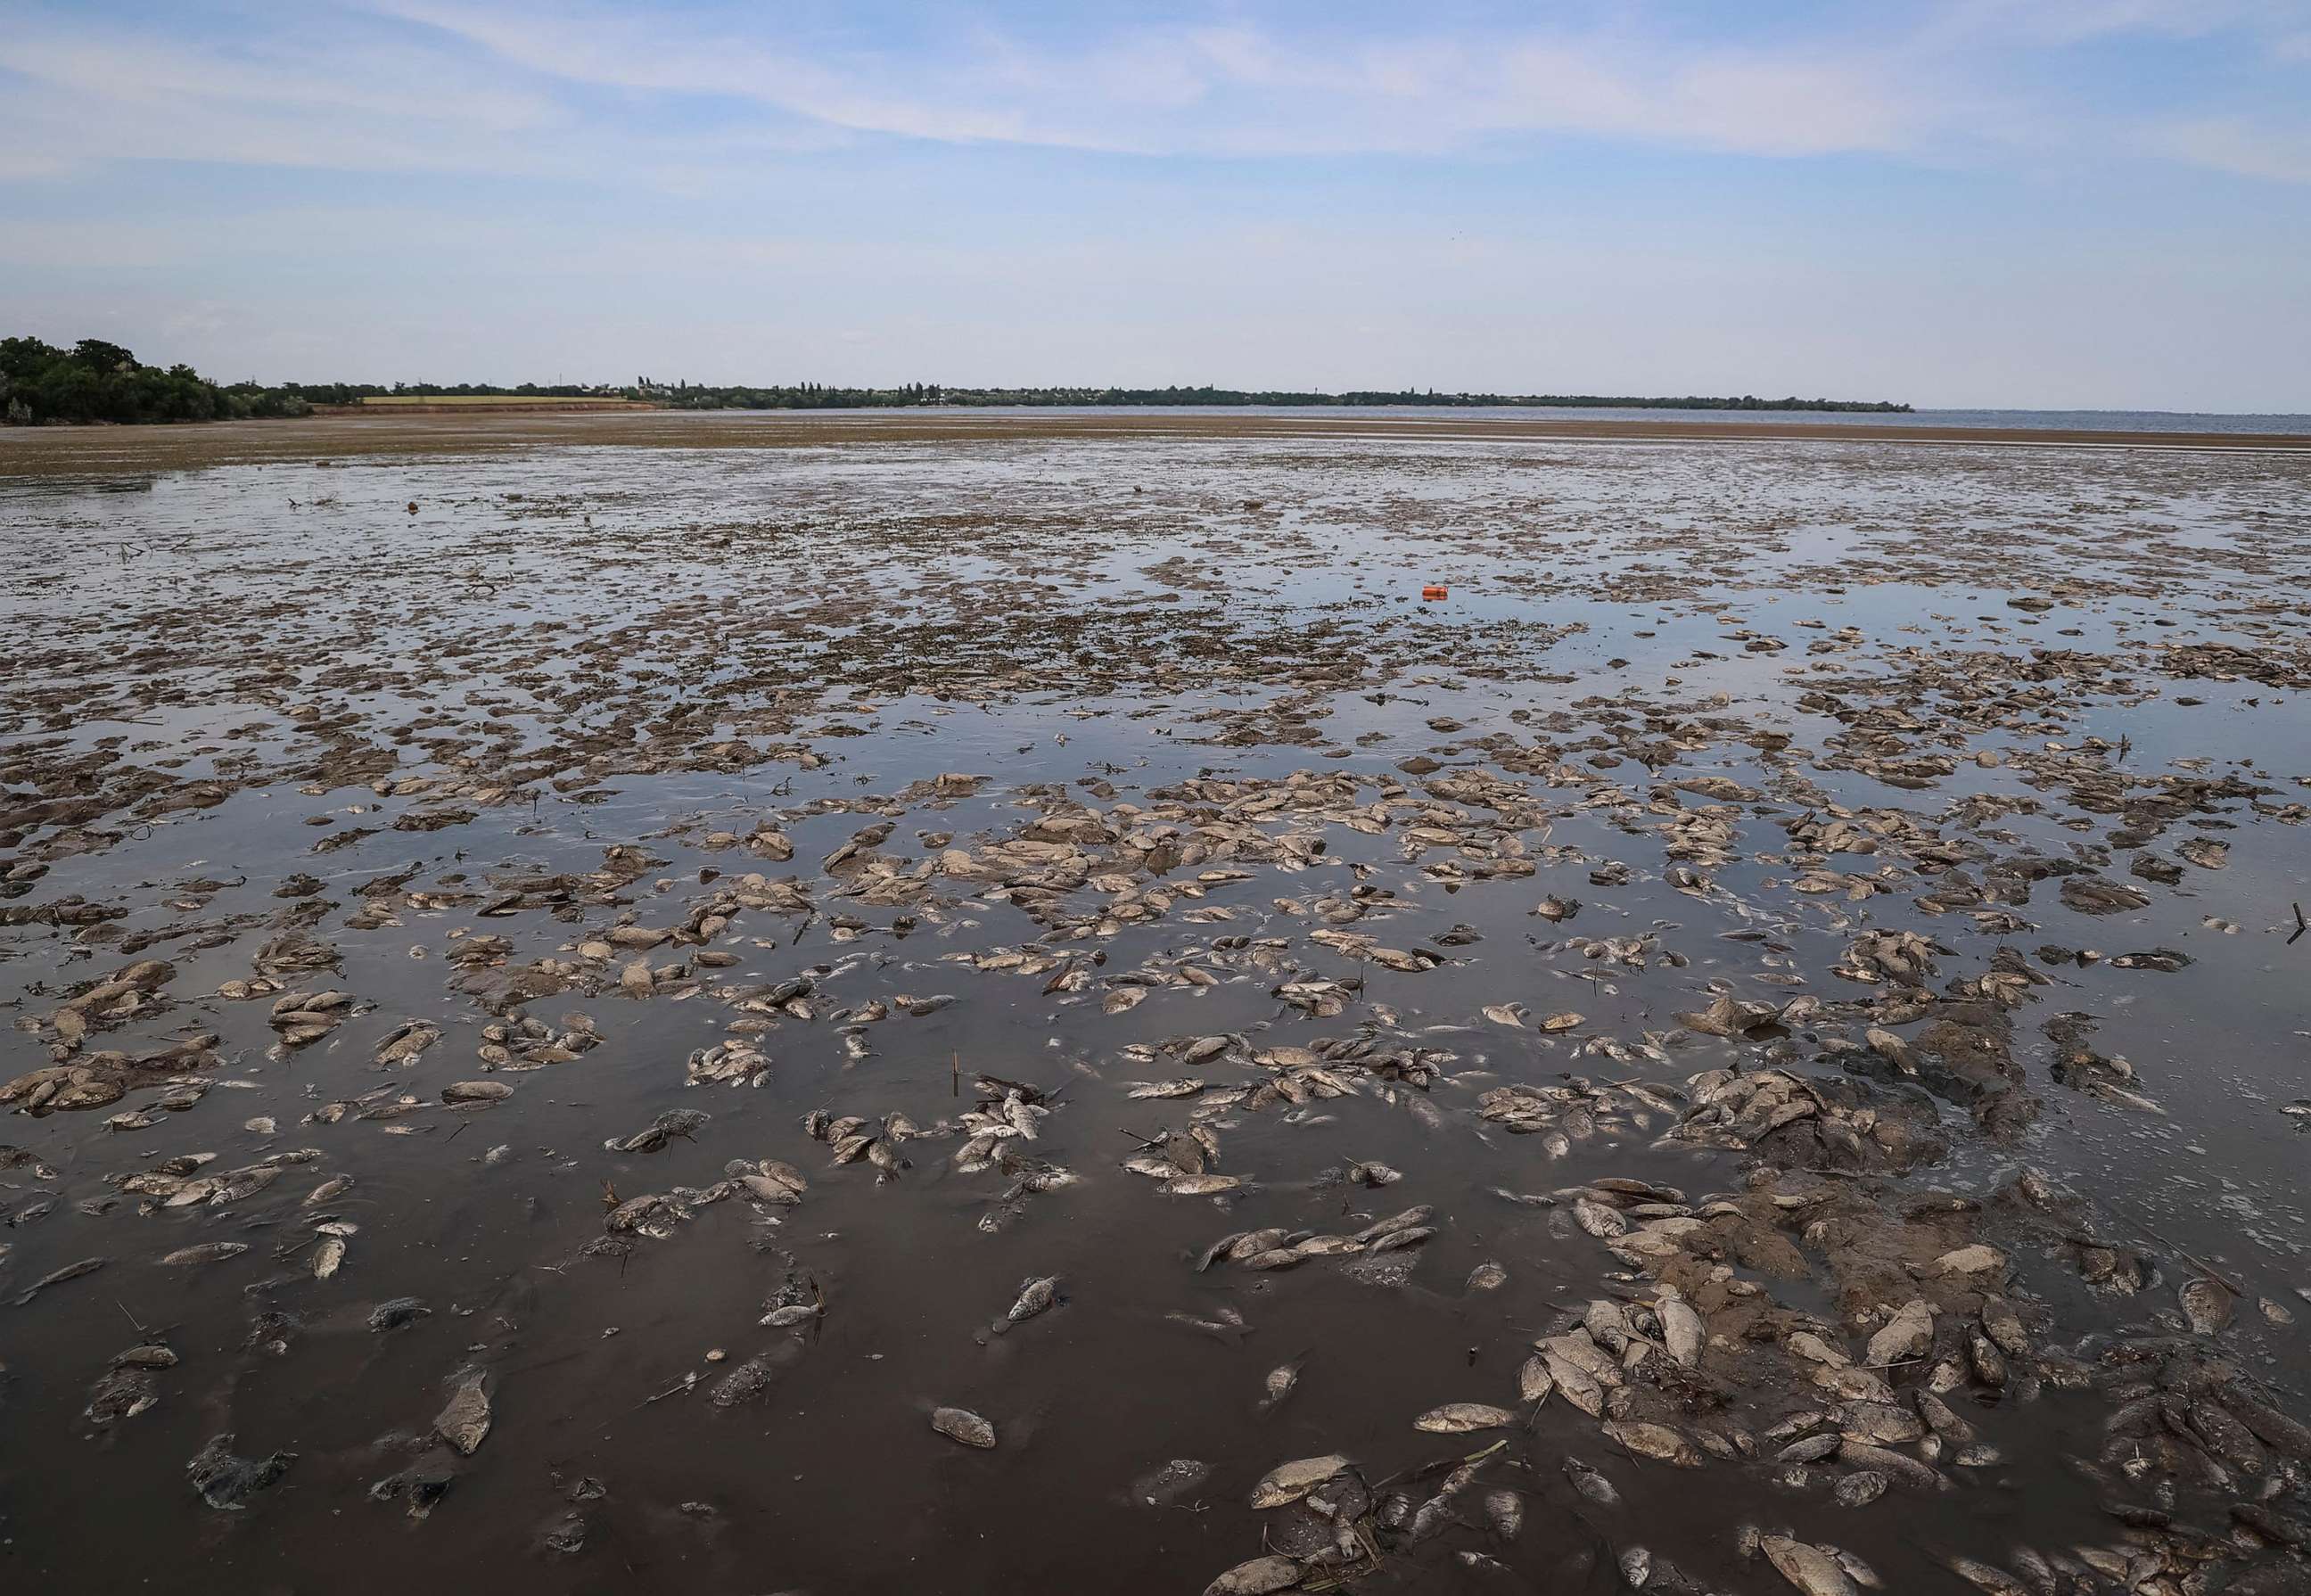 PHOTO: Dead fish are seen on the drained bottom of the Nova Kakhovka reservoir after the Nova Kakhovka dam breached, in the village of Marianske in Dnipropetrovsk region, Ukraine, on June 7, 2023.